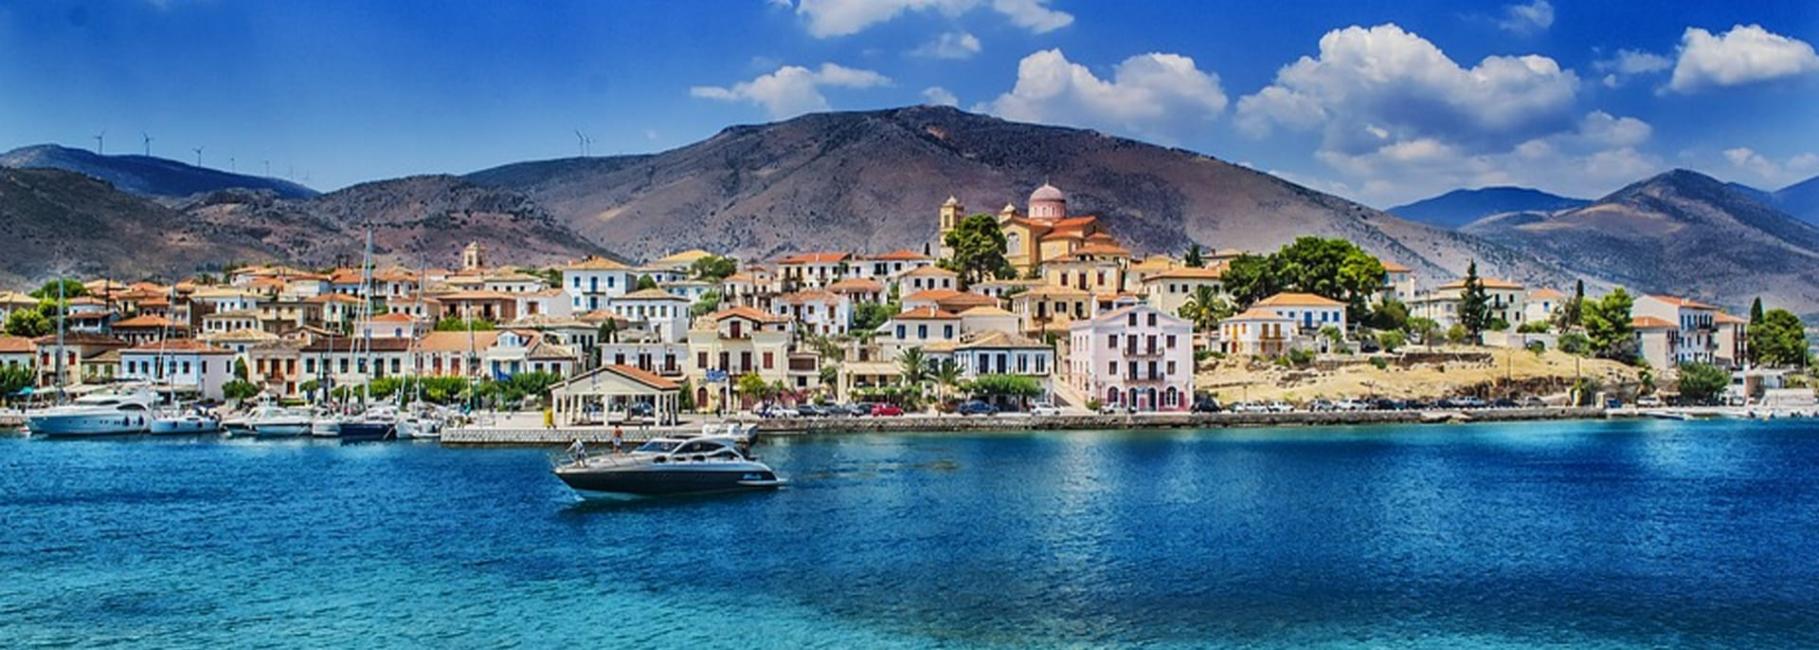 greece cultural trip header slk fe